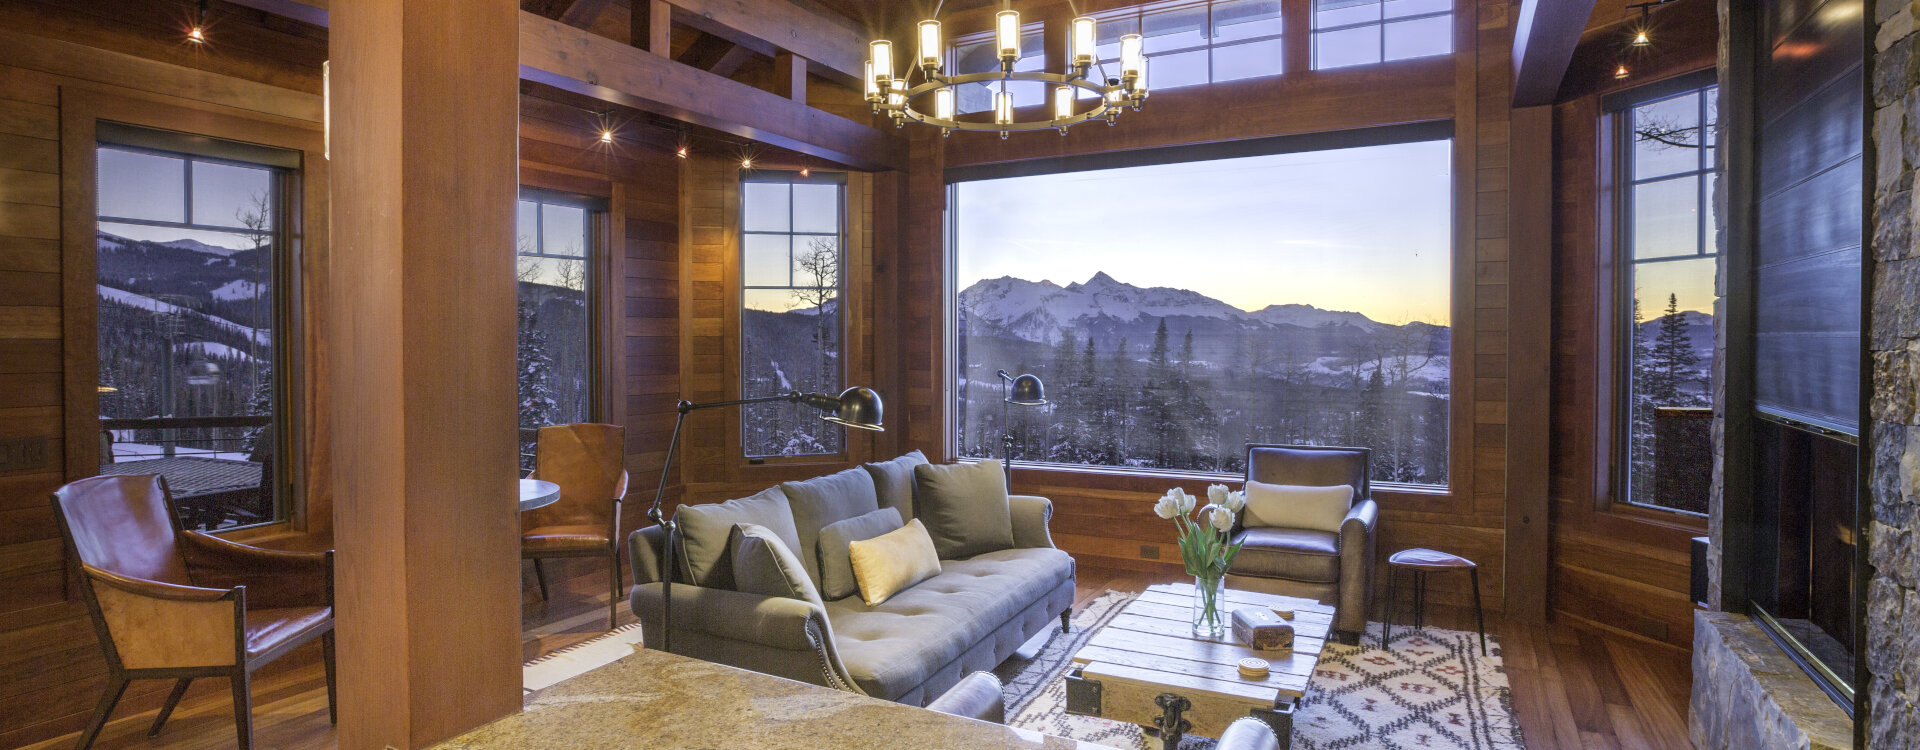 4.01-telluride-cabin-on-the-ridge-kitchen-bar-living-room-view